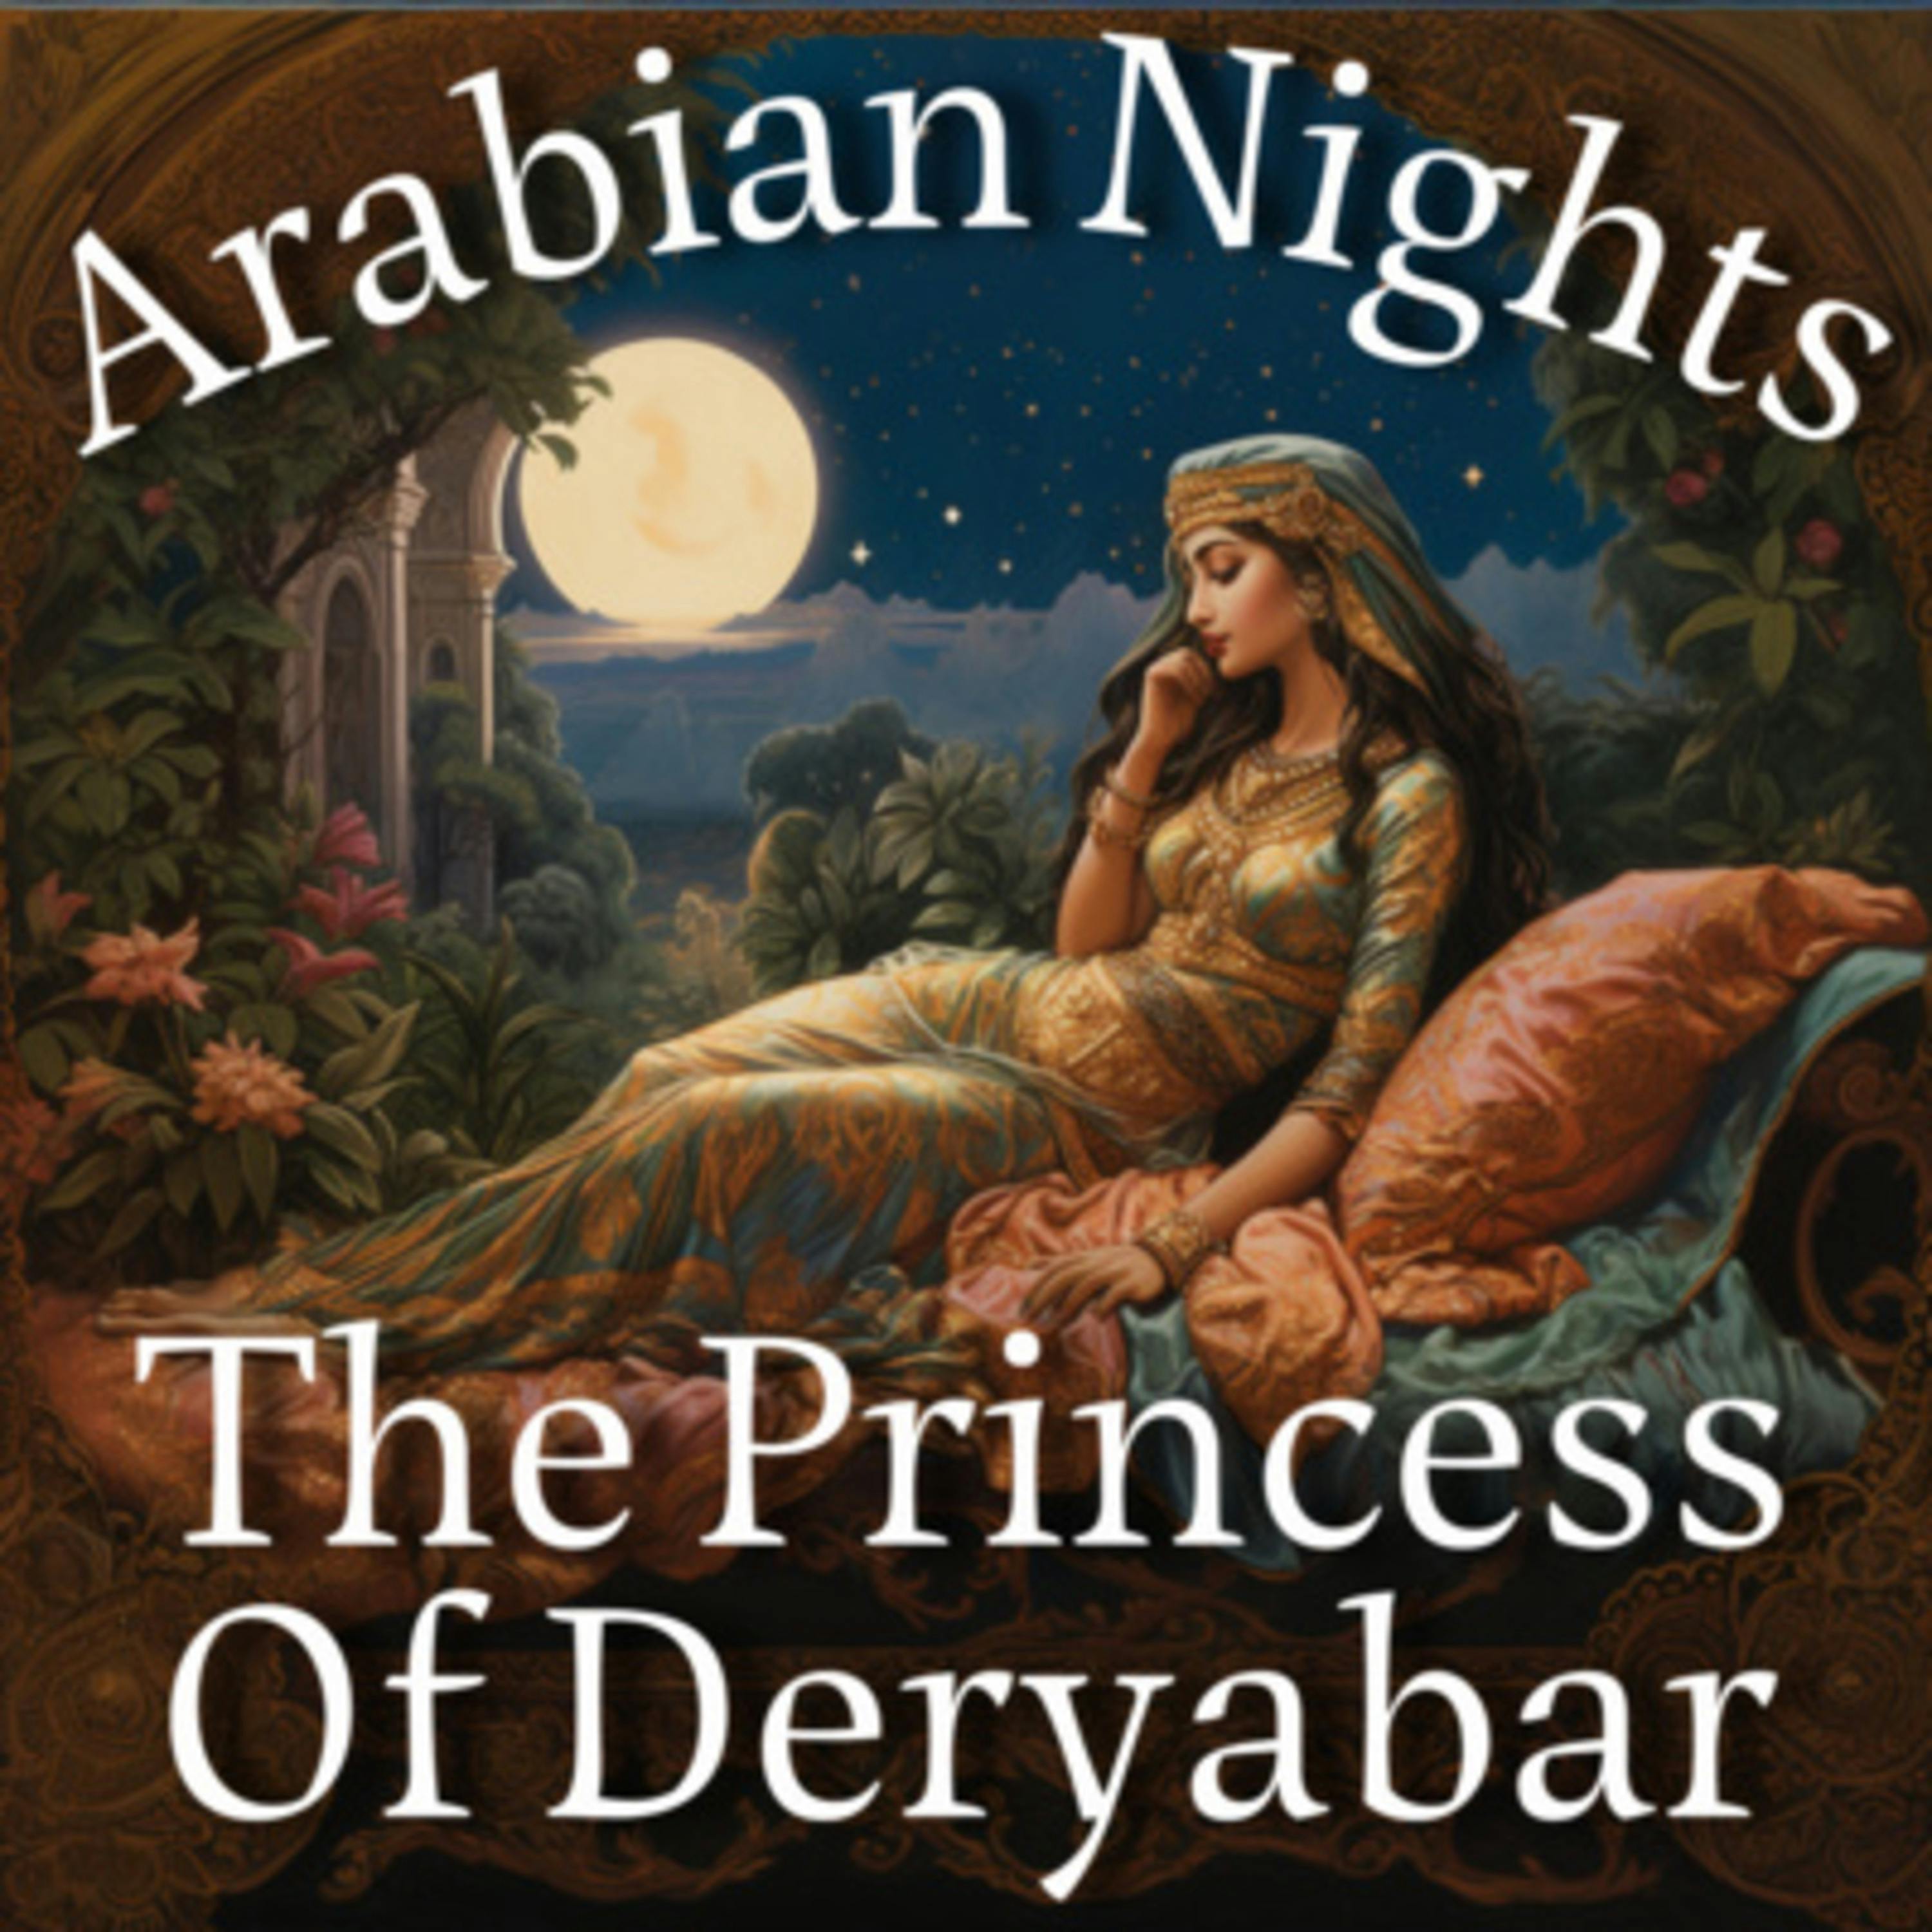 The Princess of Deryabar - An Arabian Night’s Tale.